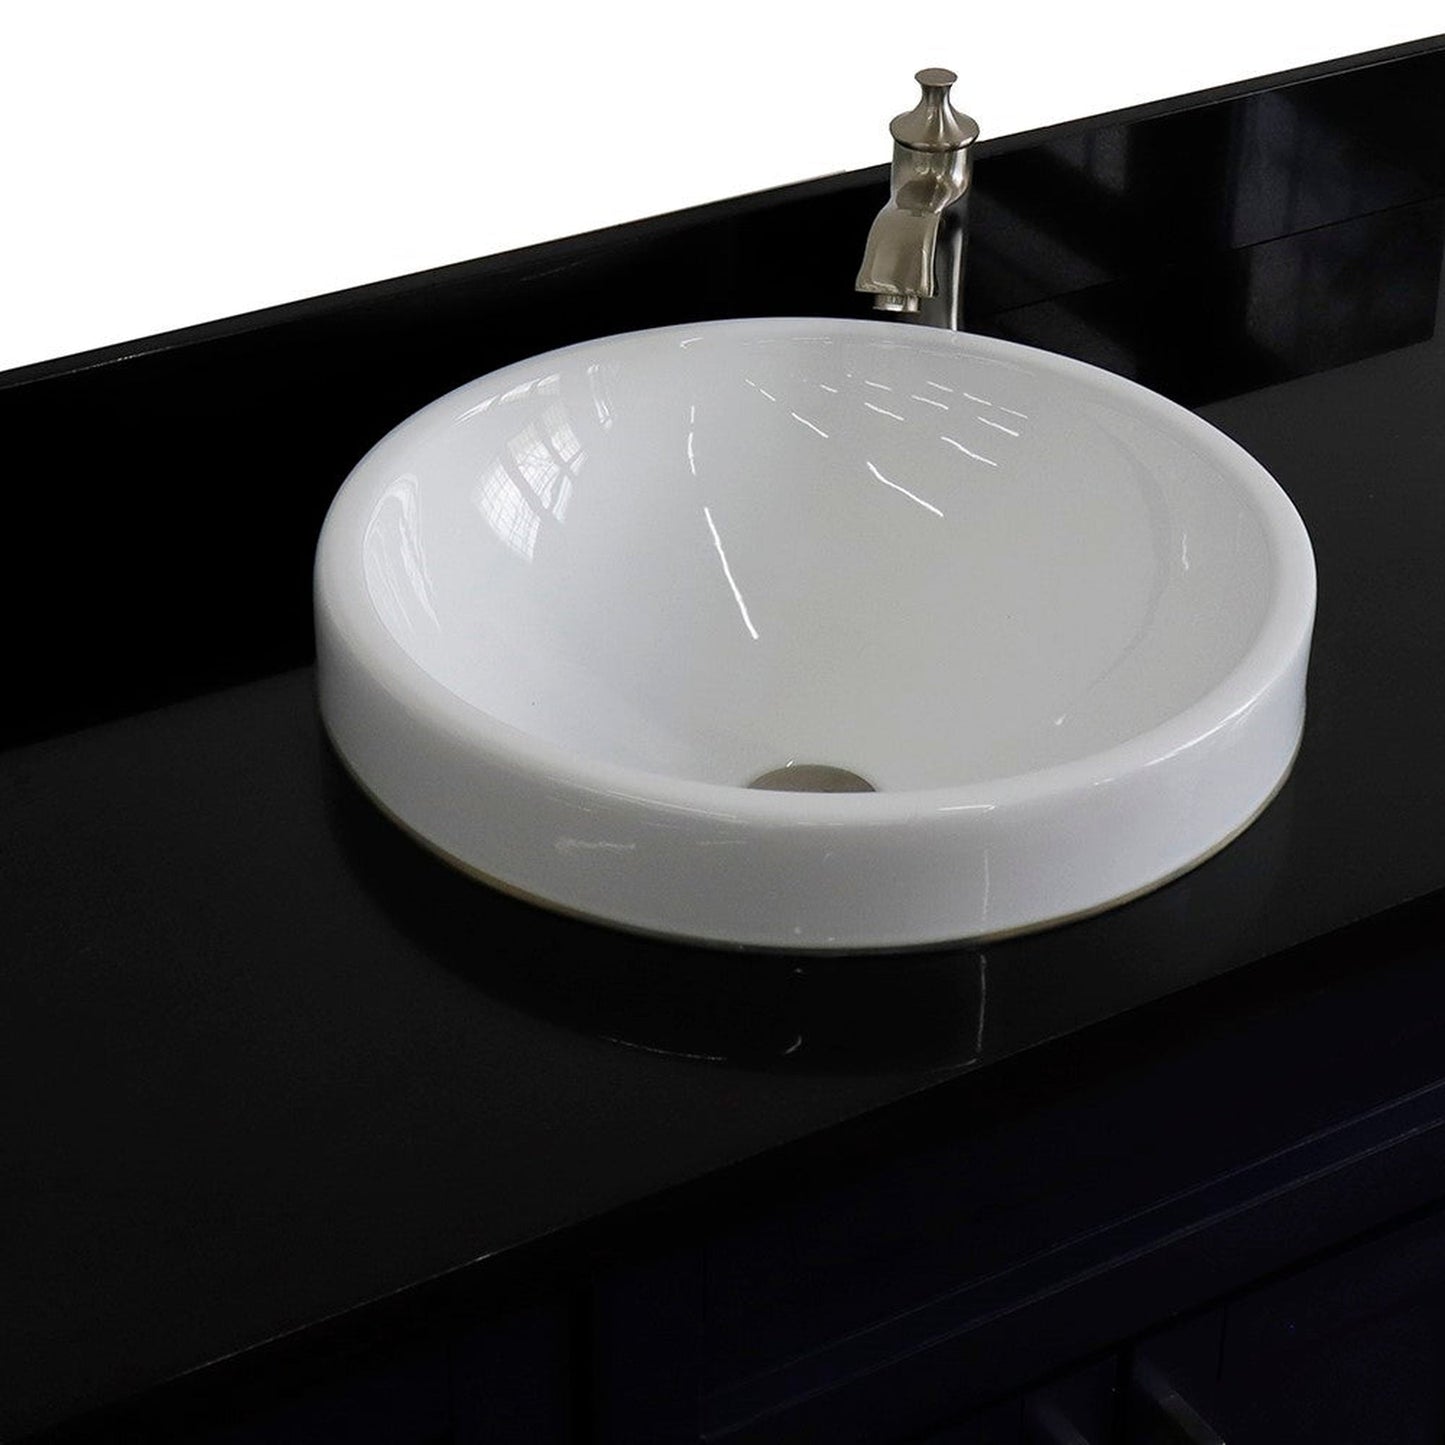 Bellaterra Home Terni 49" 2-Door 6-Drawer Blue Freestanding Vanity Set With Ceramic Vessel Sink and Black Galaxy Granite Top